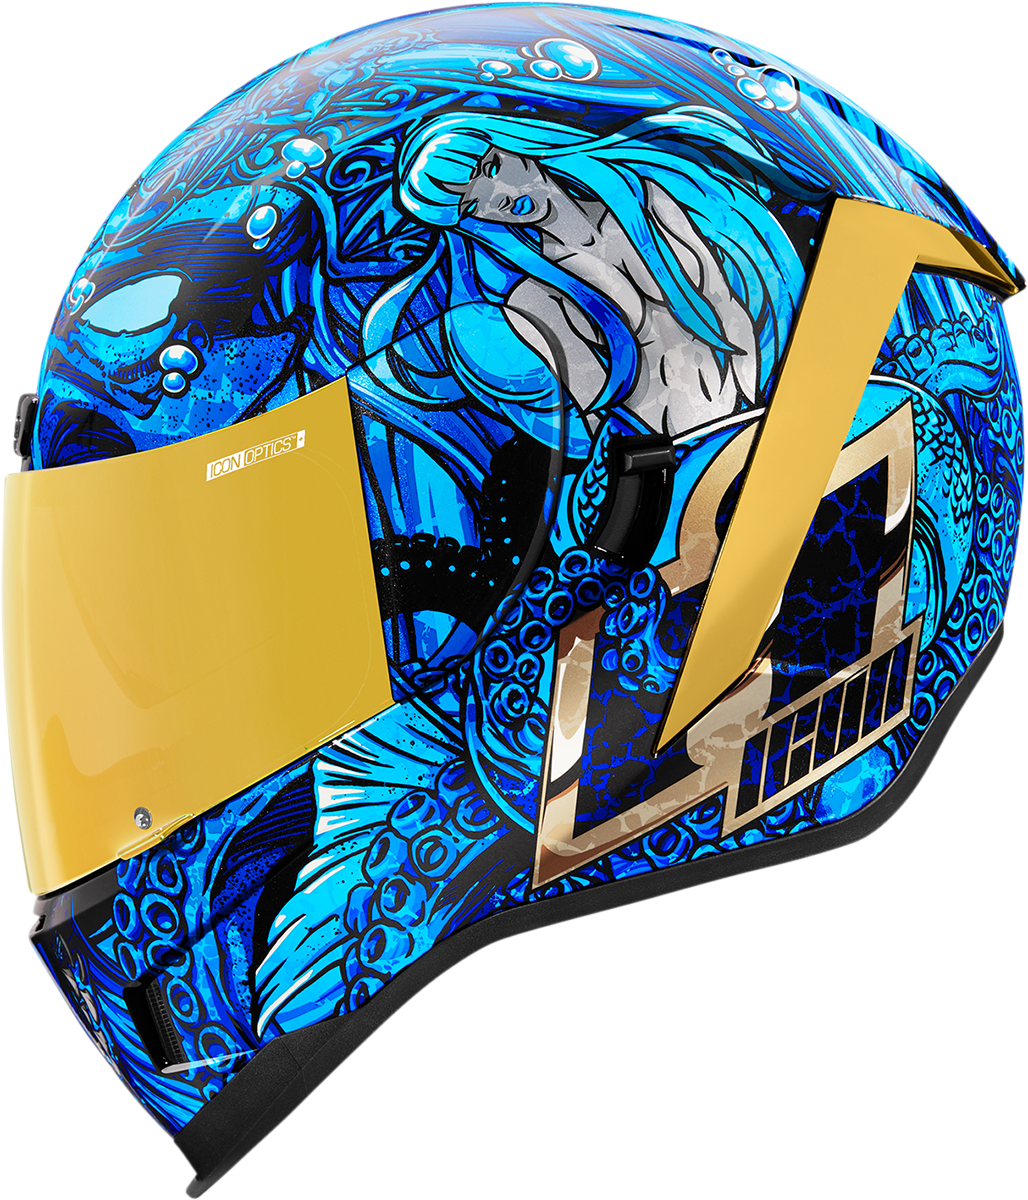 ICON Airform™ Helmet - Ships Company - Blue